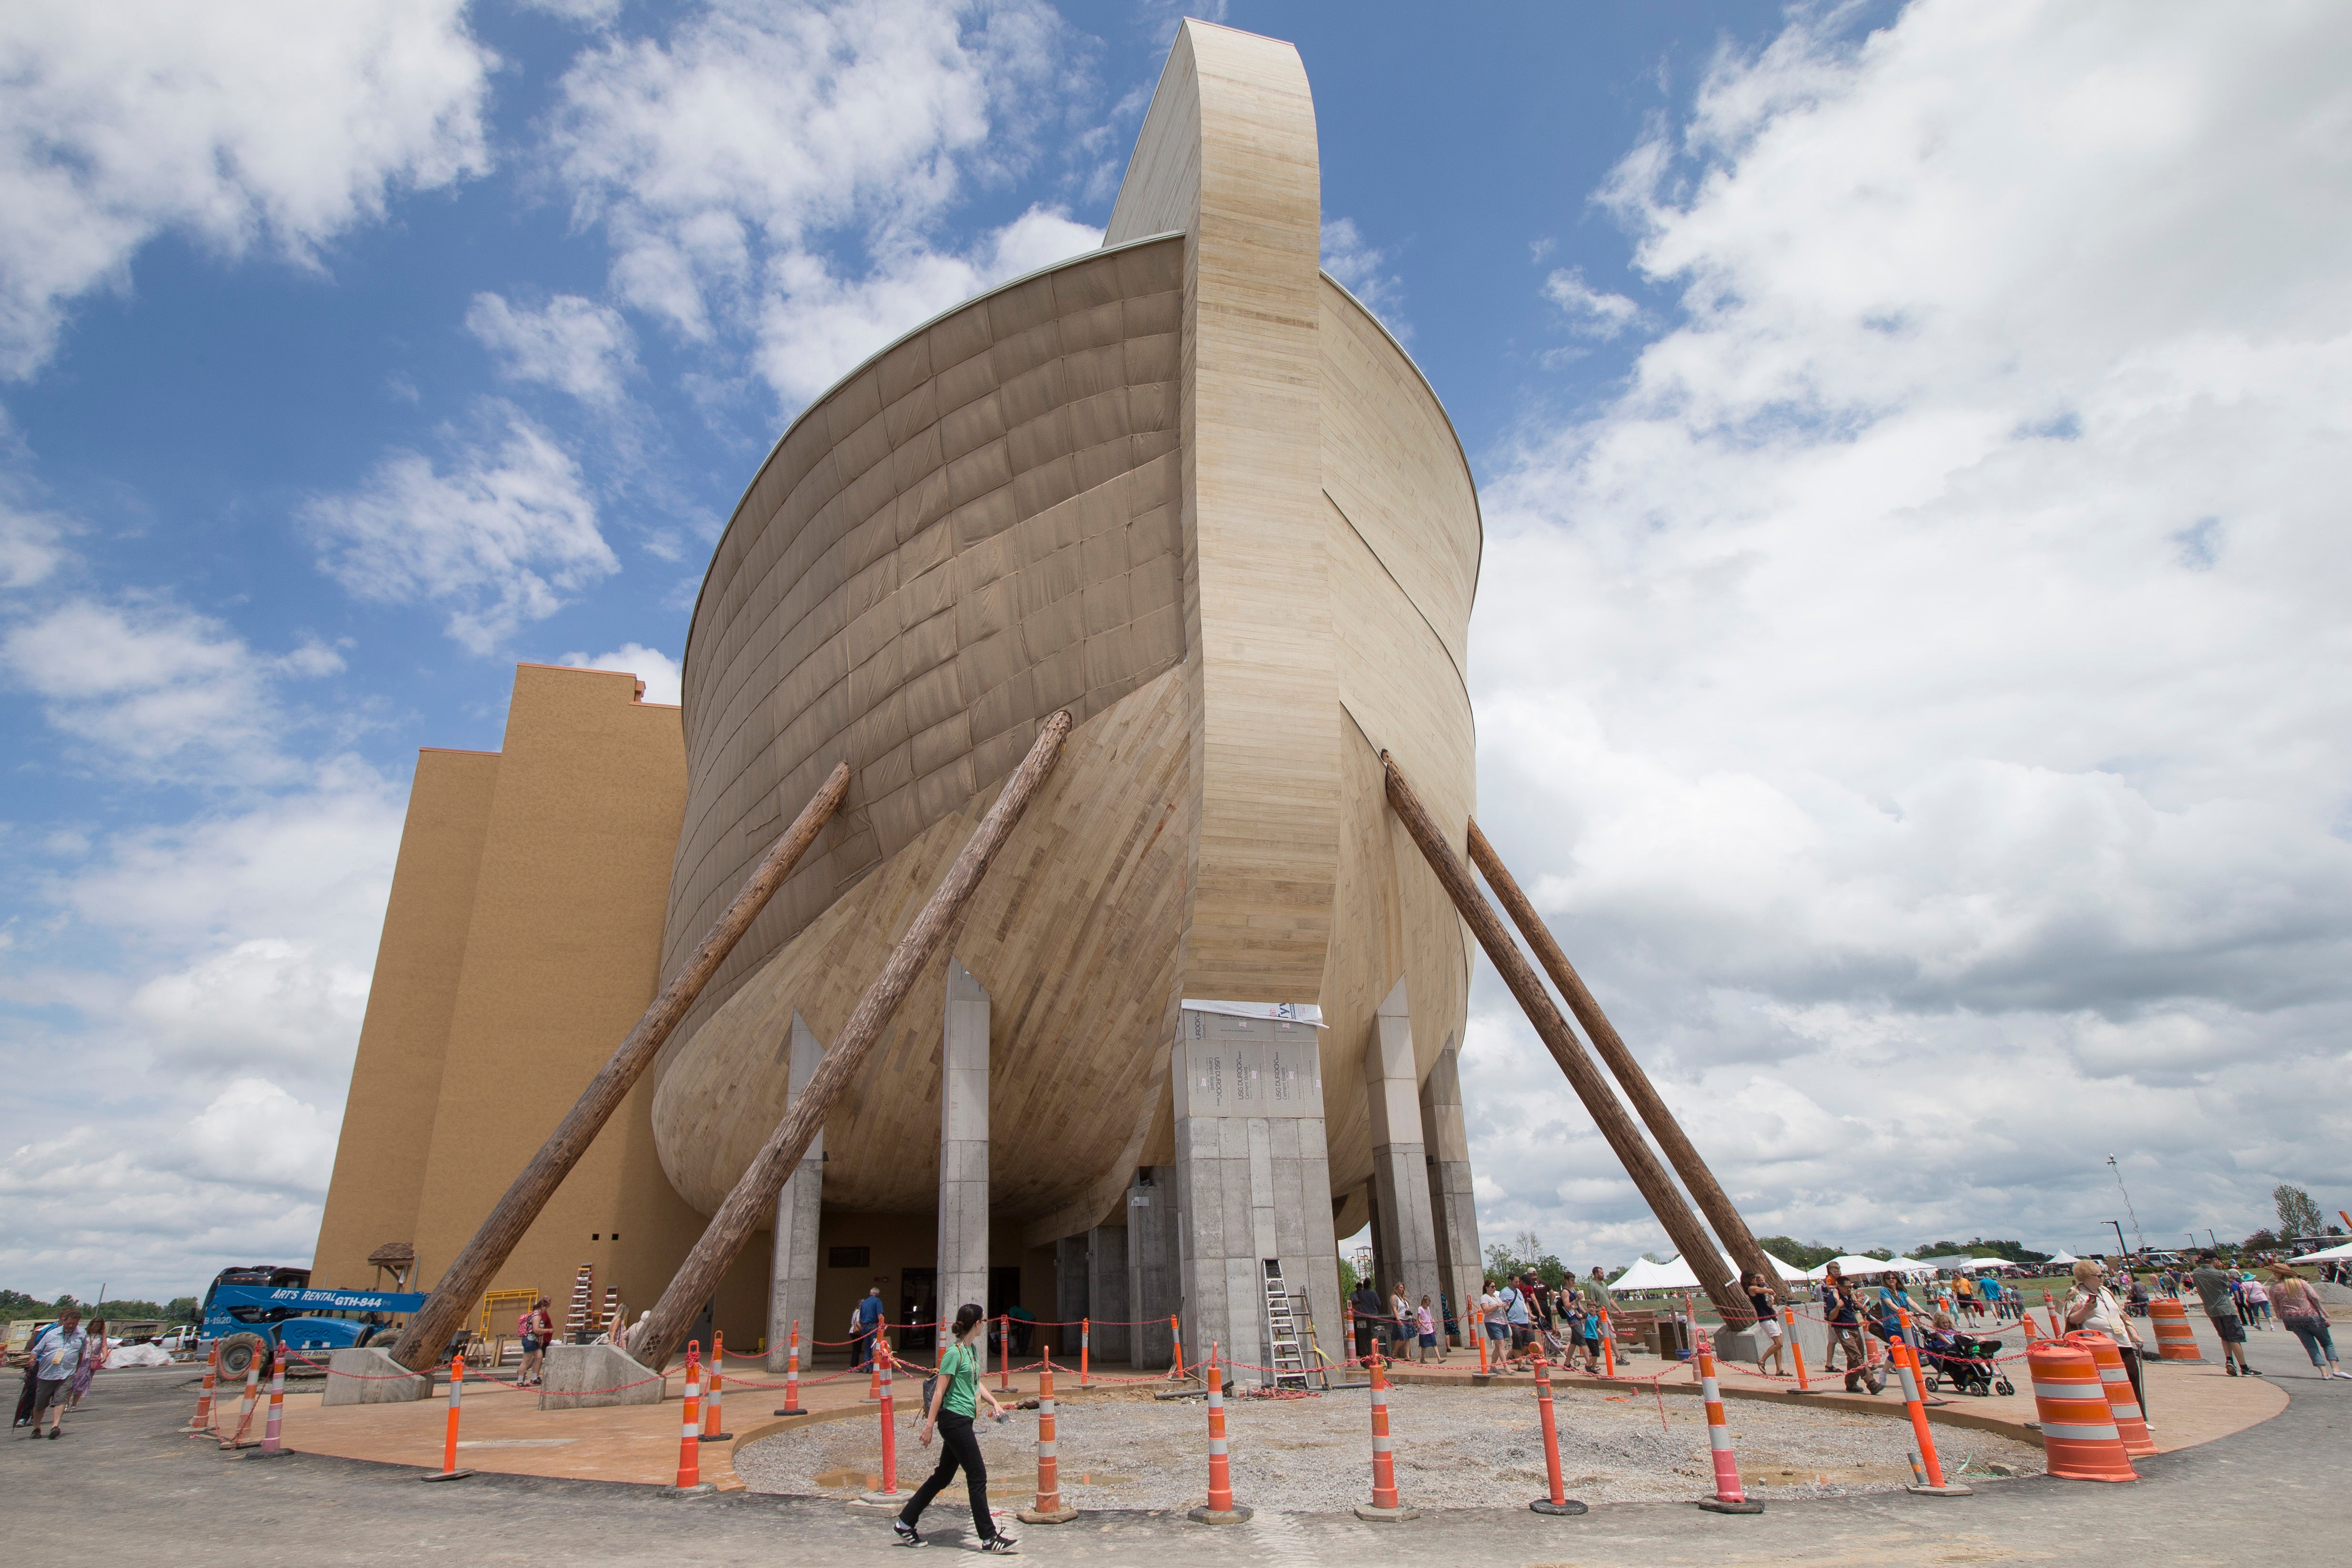 Barge-Size Noah's Ark Is A Creationist's Theme Park